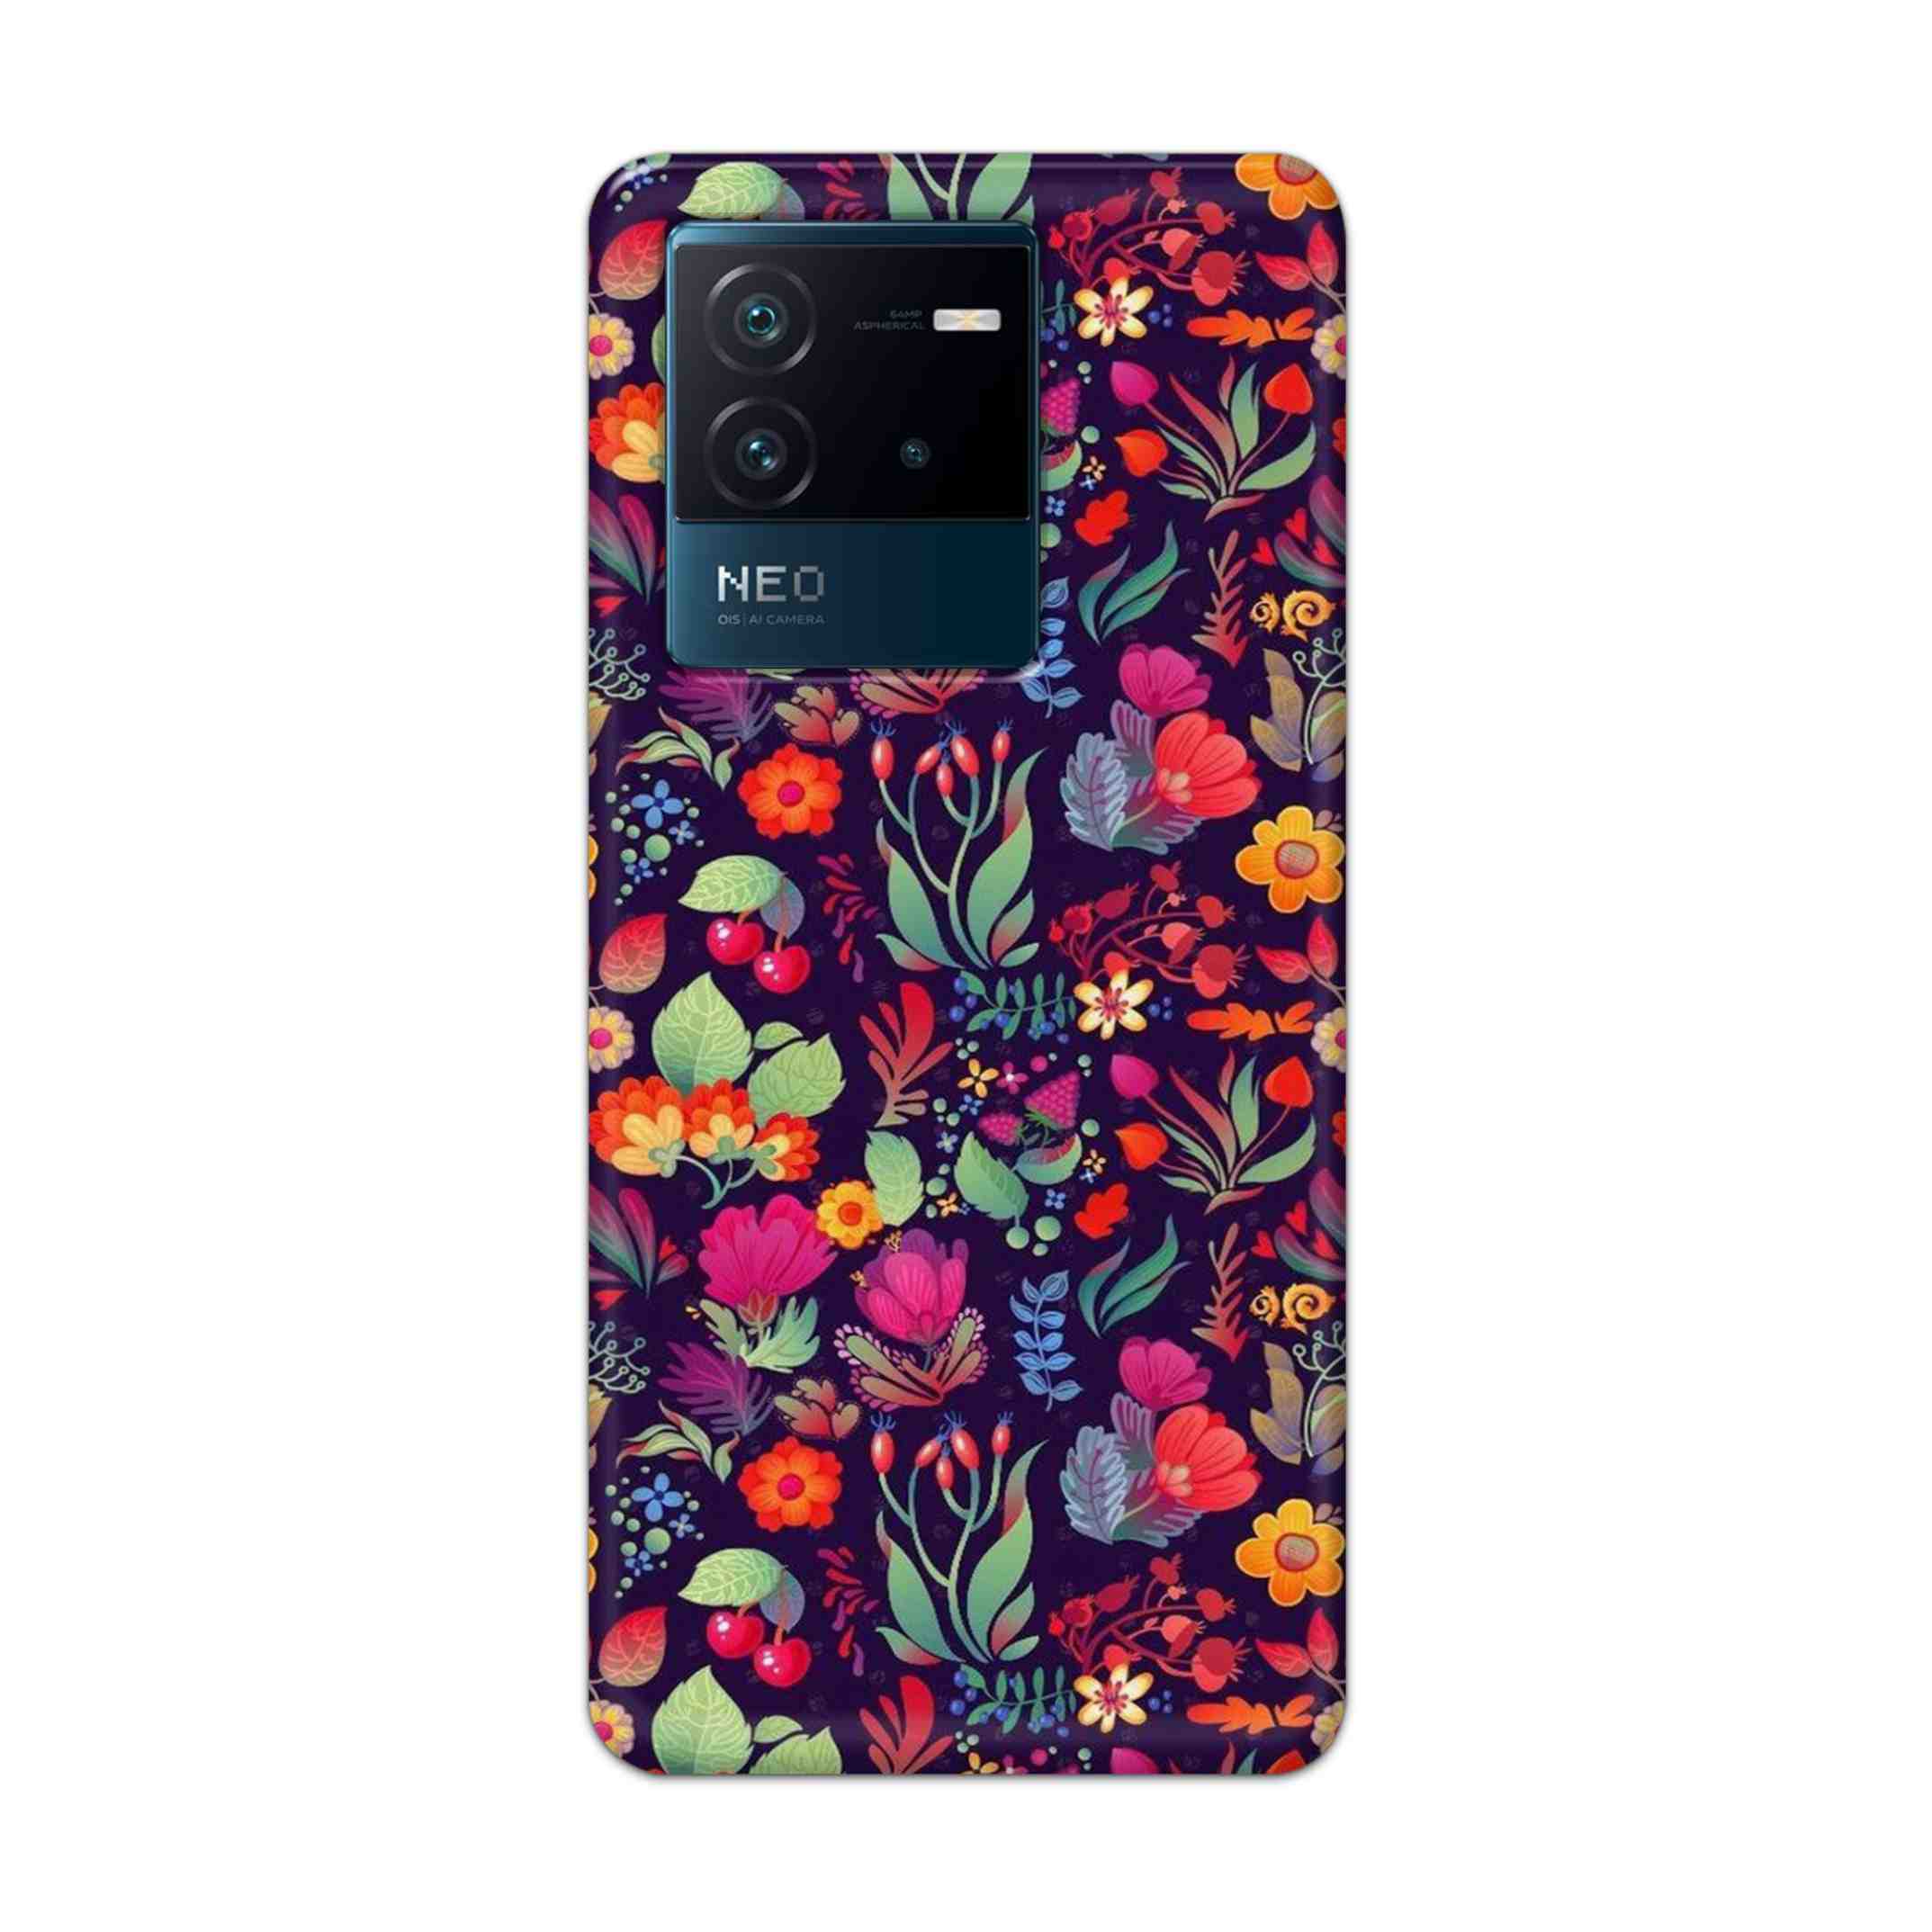 Buy Fruits Flower Hard Back Mobile Phone Case Cover For iQOO Neo 6 5G Online